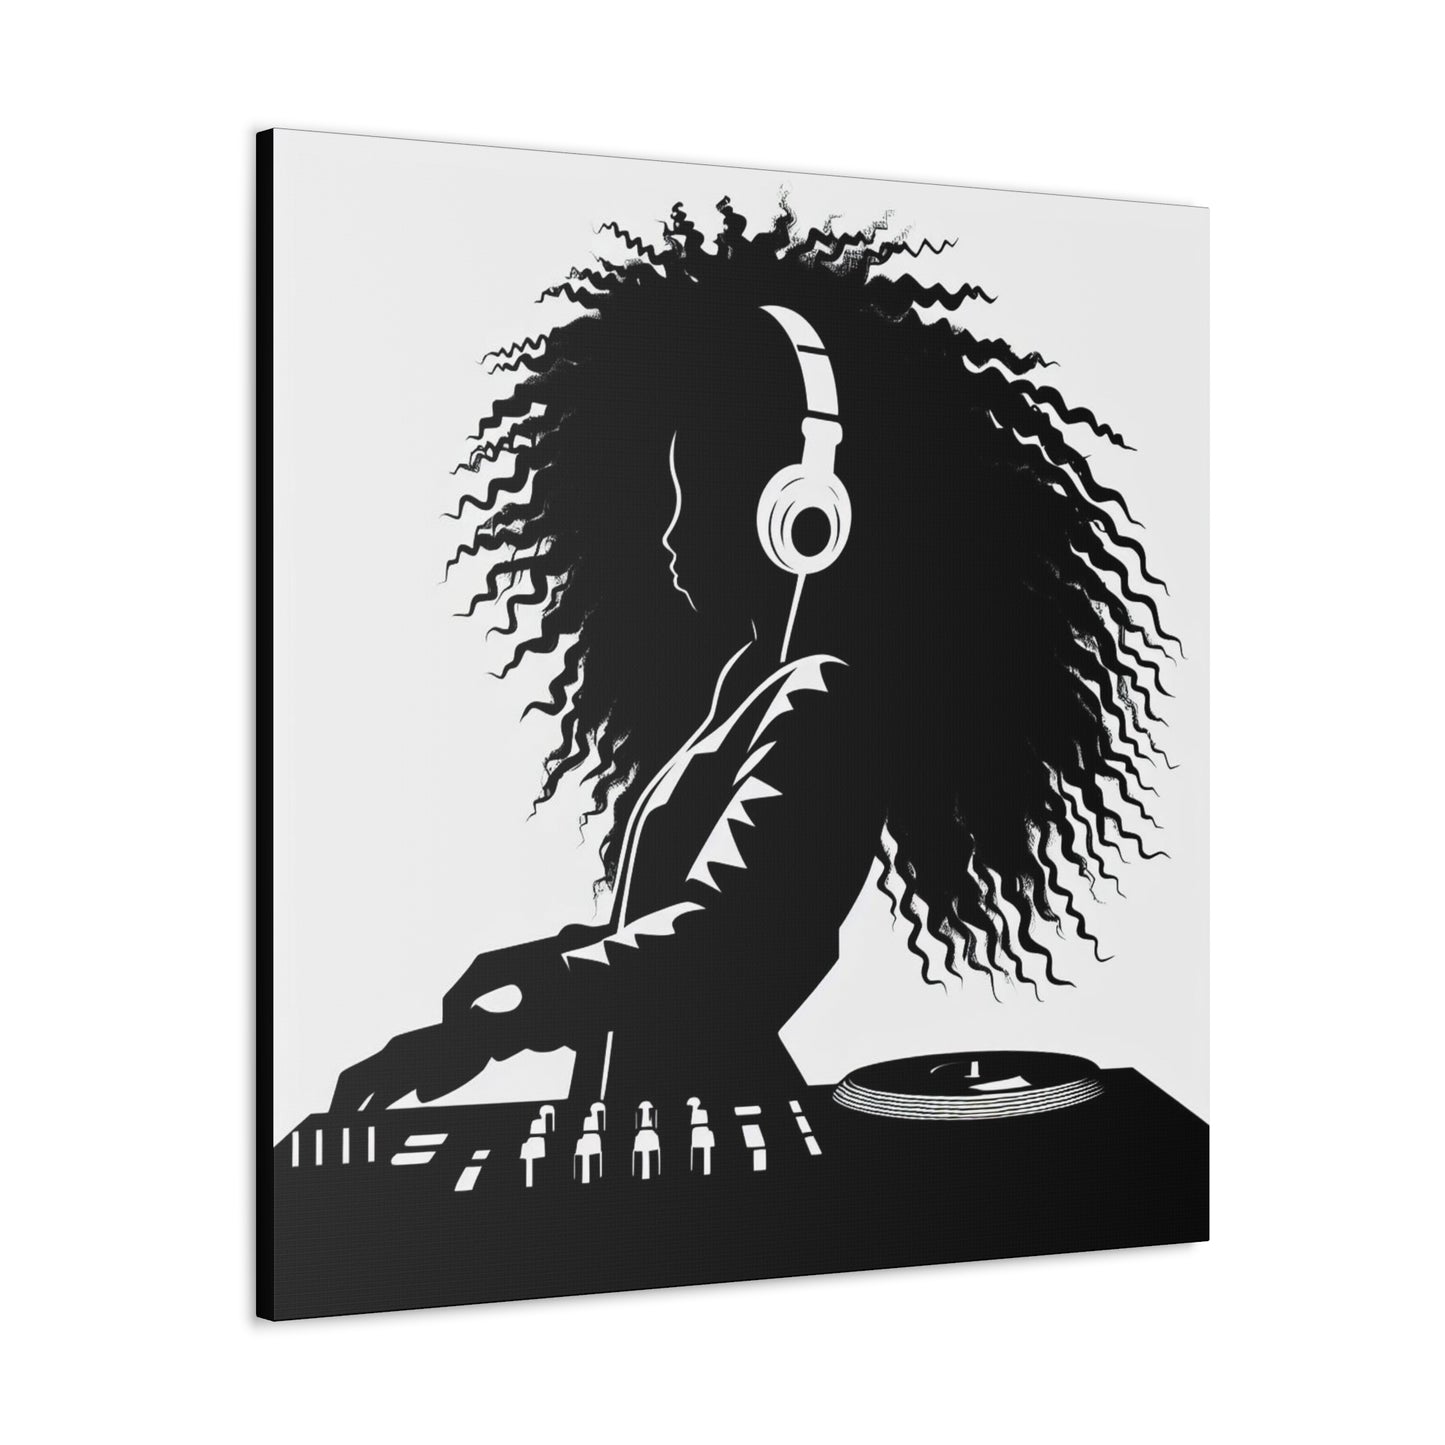 Smoov DJ Girl Canvas Wall Art